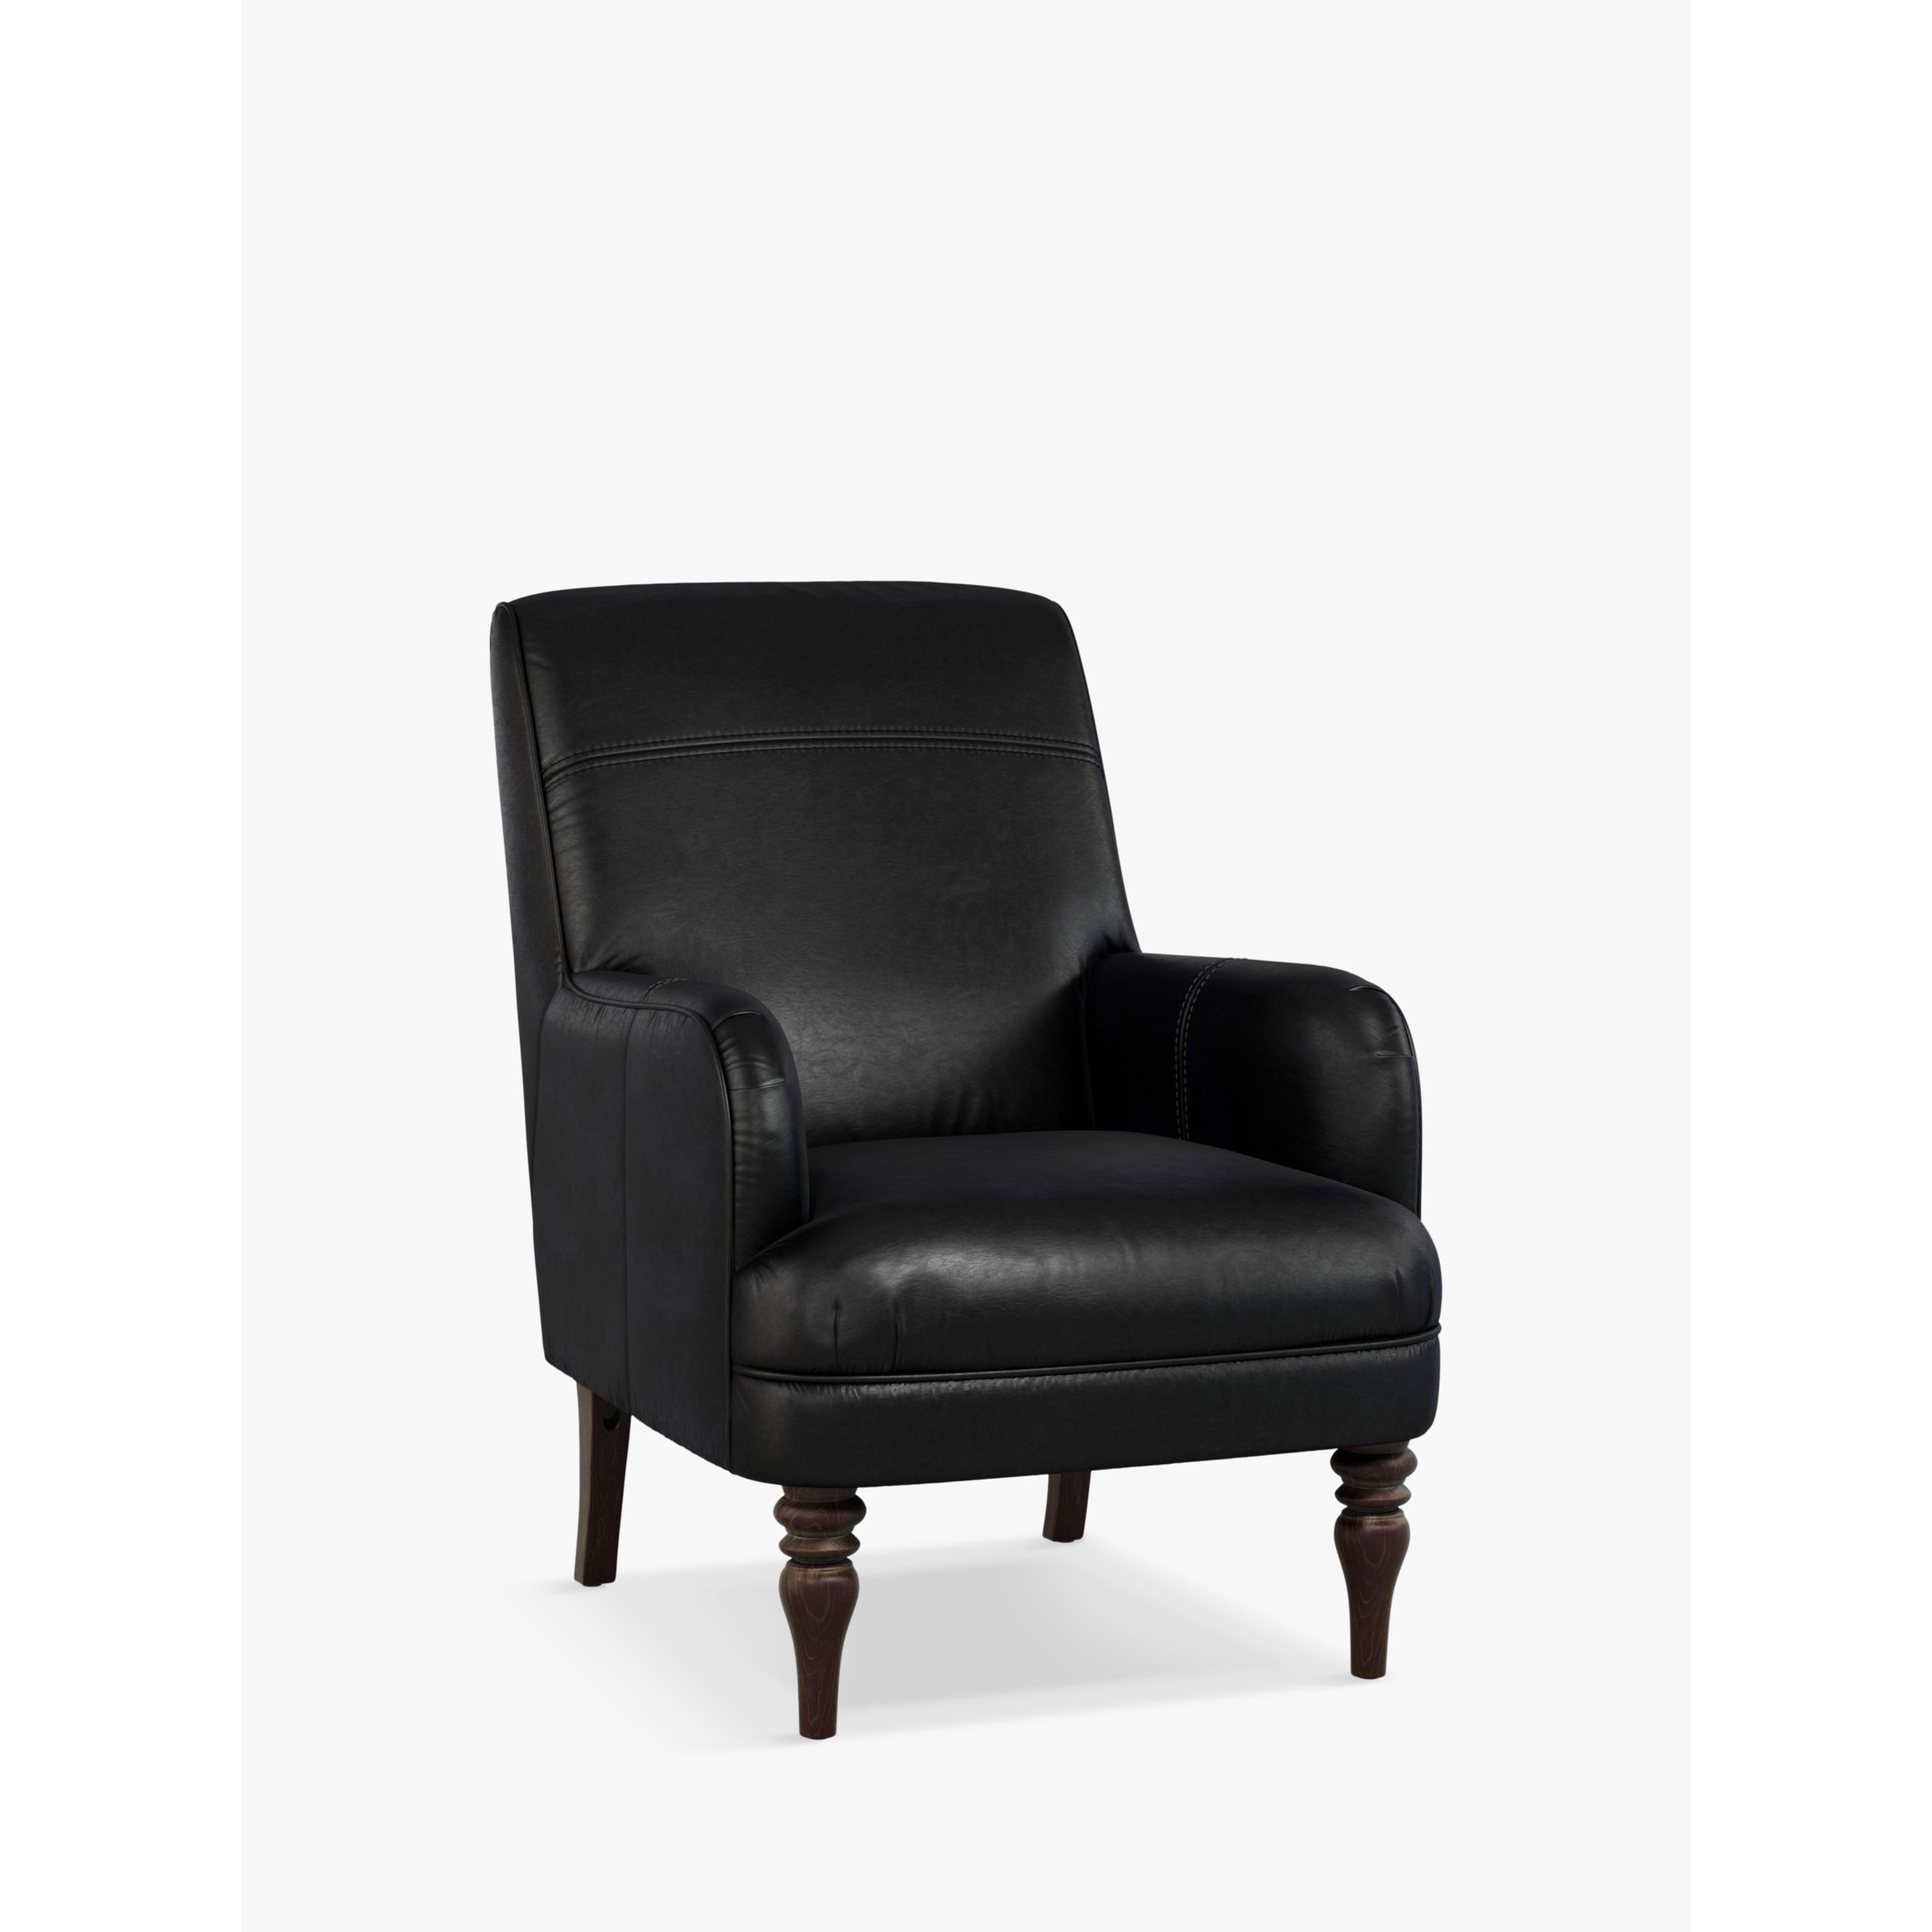 John Lewis Sterling Leather Armchair, Dark Leg - image 1